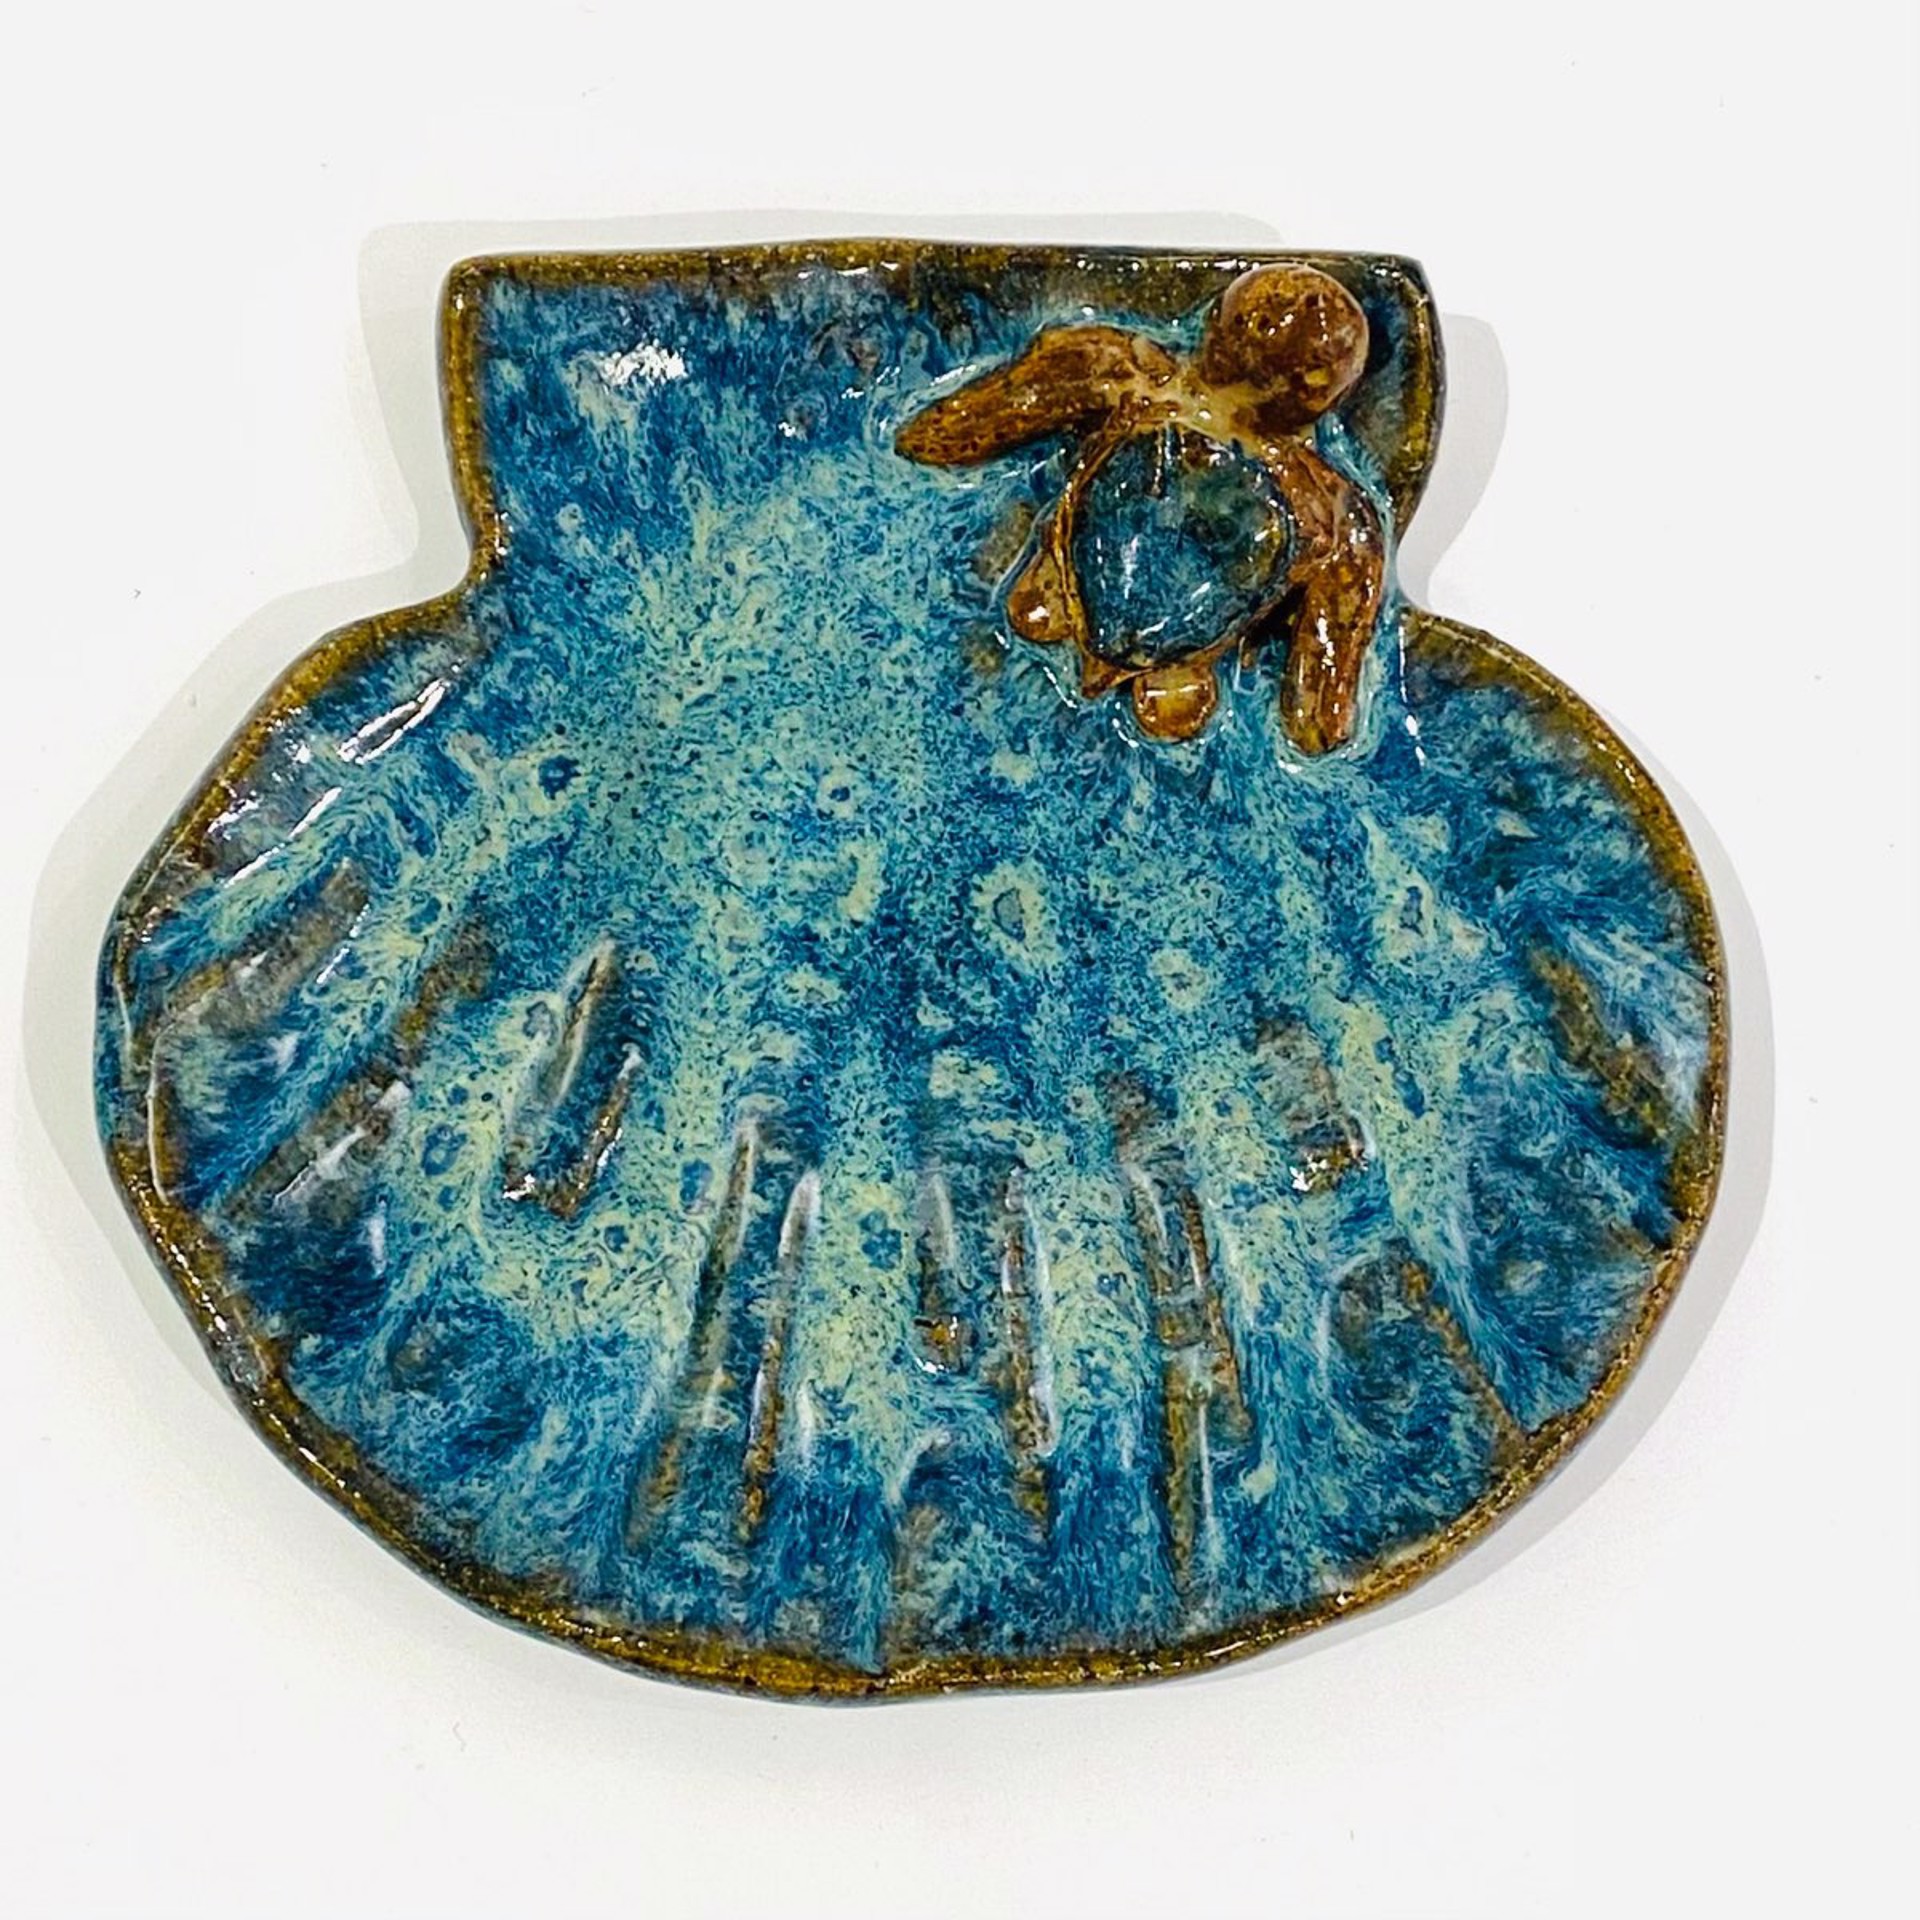 LG22-927 Shell Dish with Turtle (Blue Glaze) by Jim & Steffi Logan